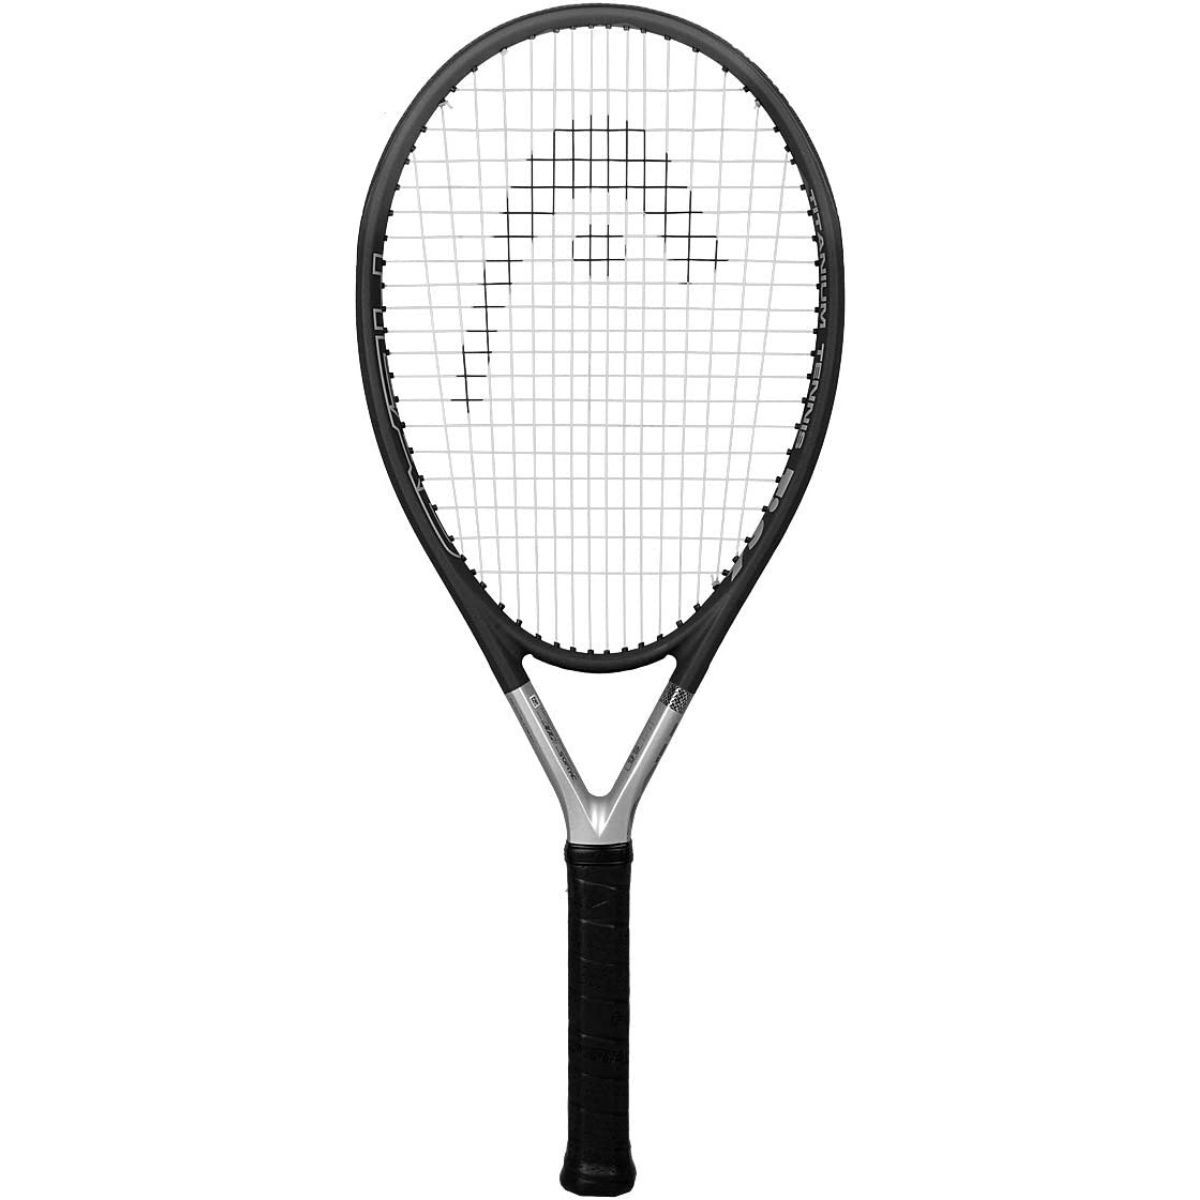 The Best Head Tennis Rackets Options: Head Titanium Ti.S6